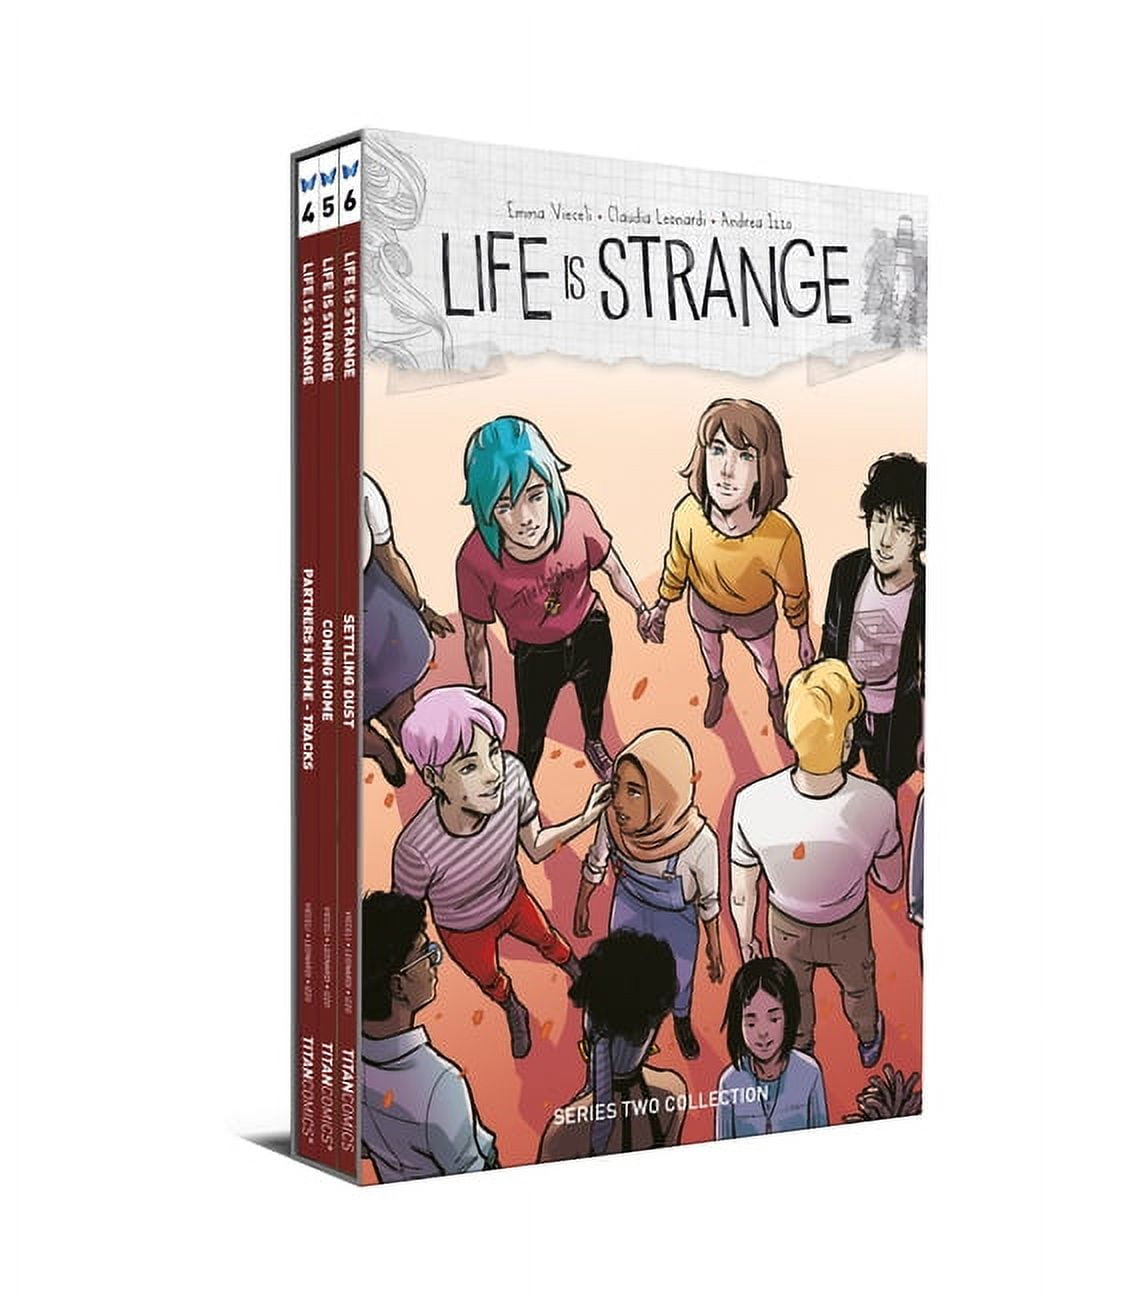 Life is Strange: 4-6 Boxed Set (Graphic Novel) (Paperback) - Walmart.com